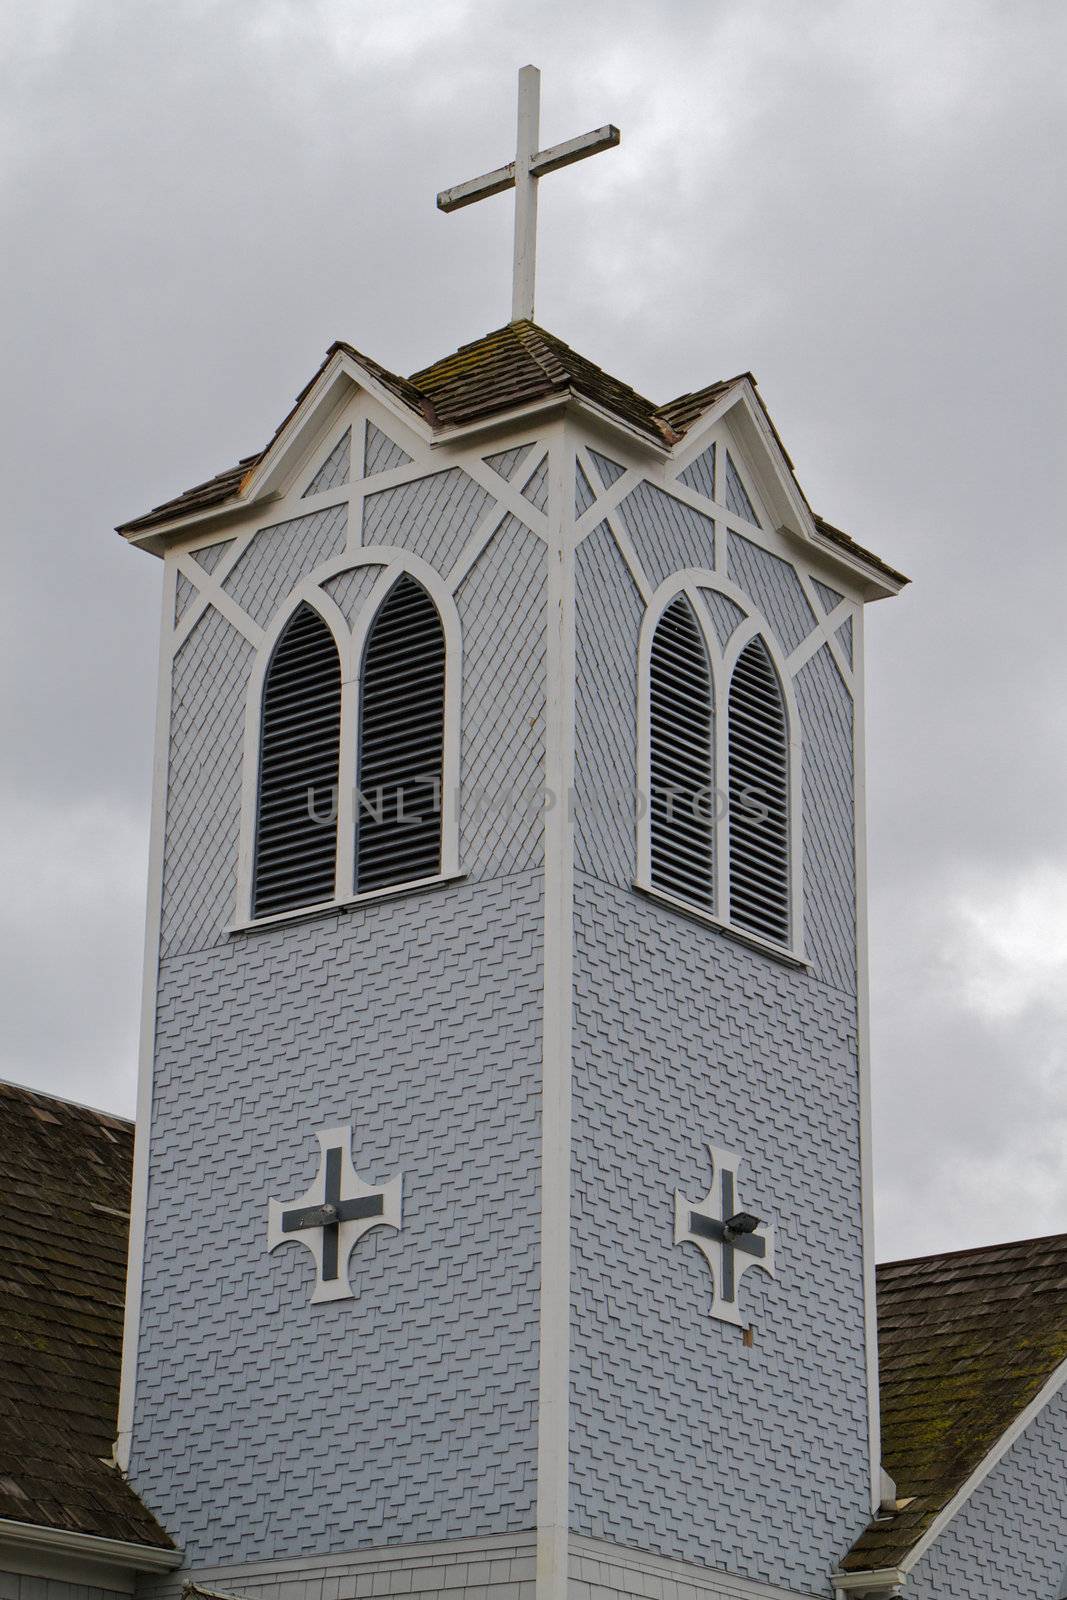 Wood Church tower by bobkeenan